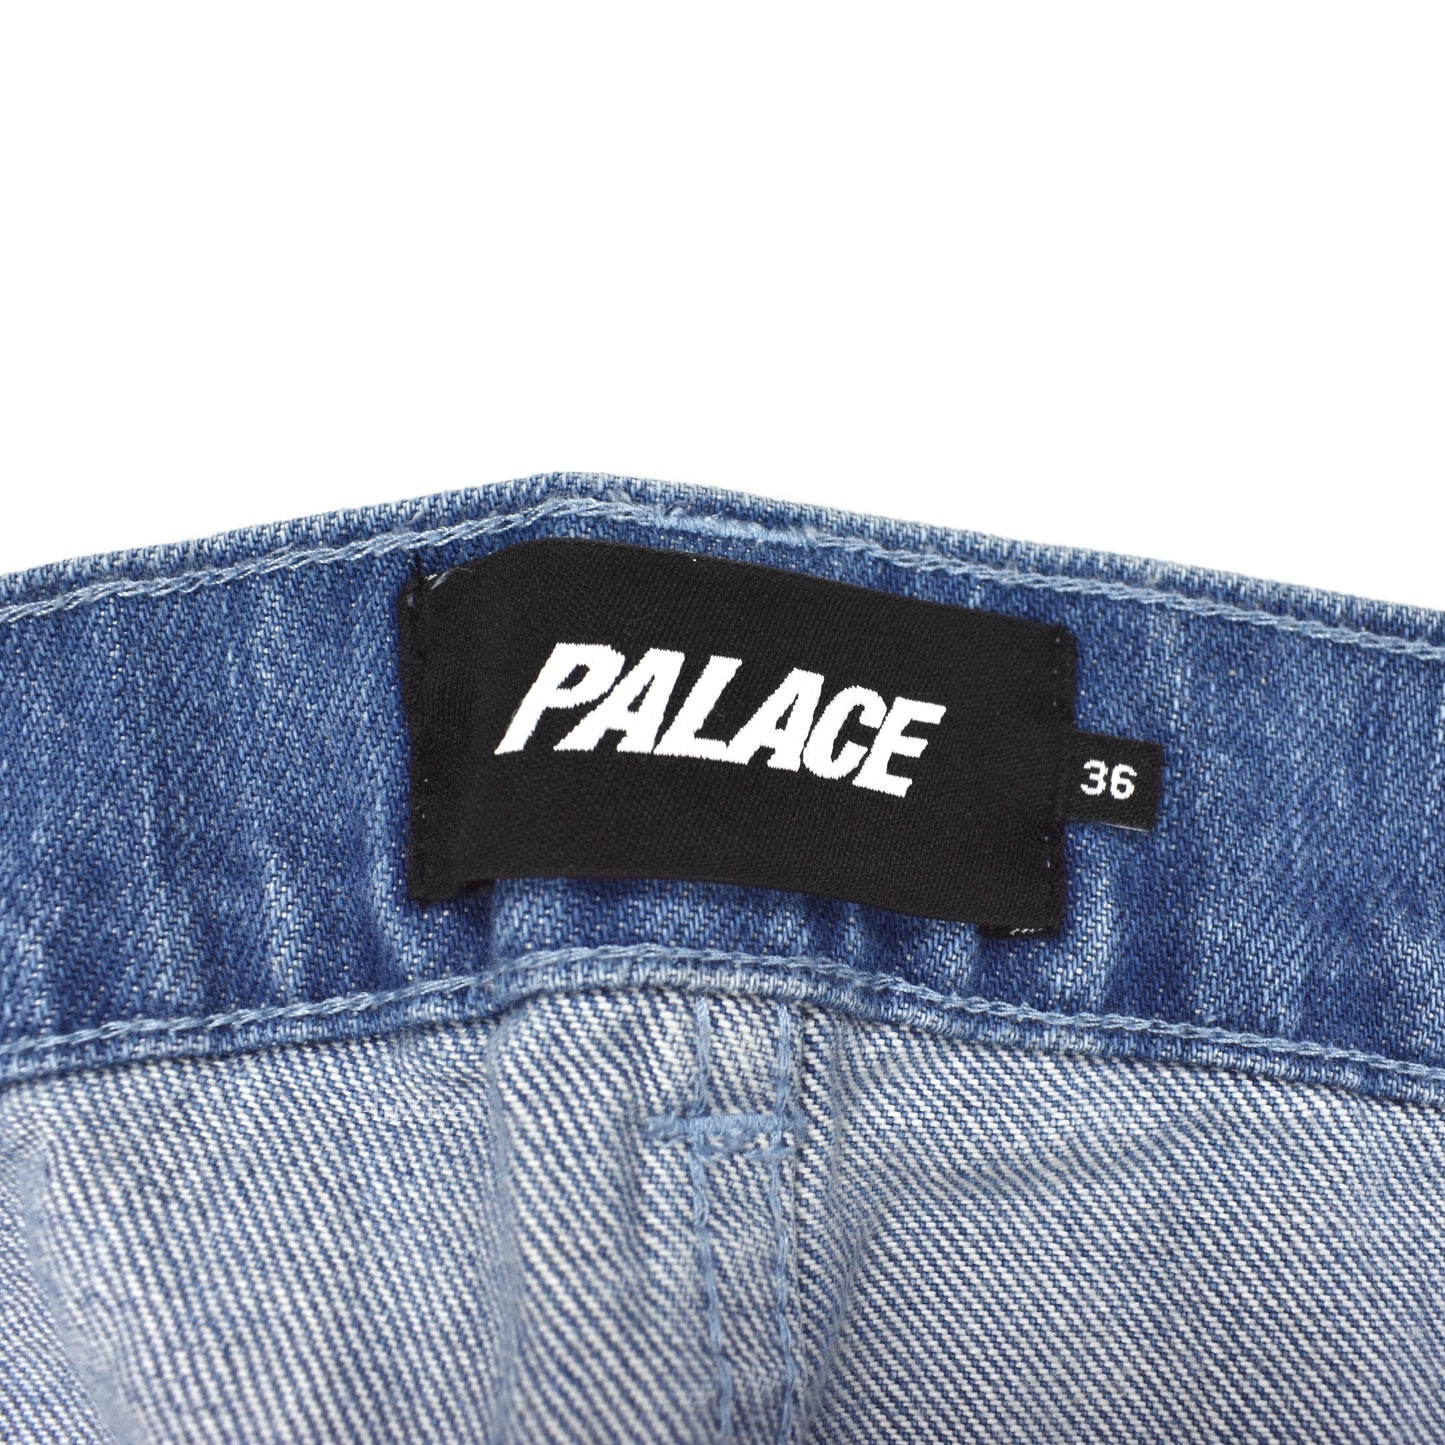 Palace - 'Quacked' Duck Logo Denim Jeans